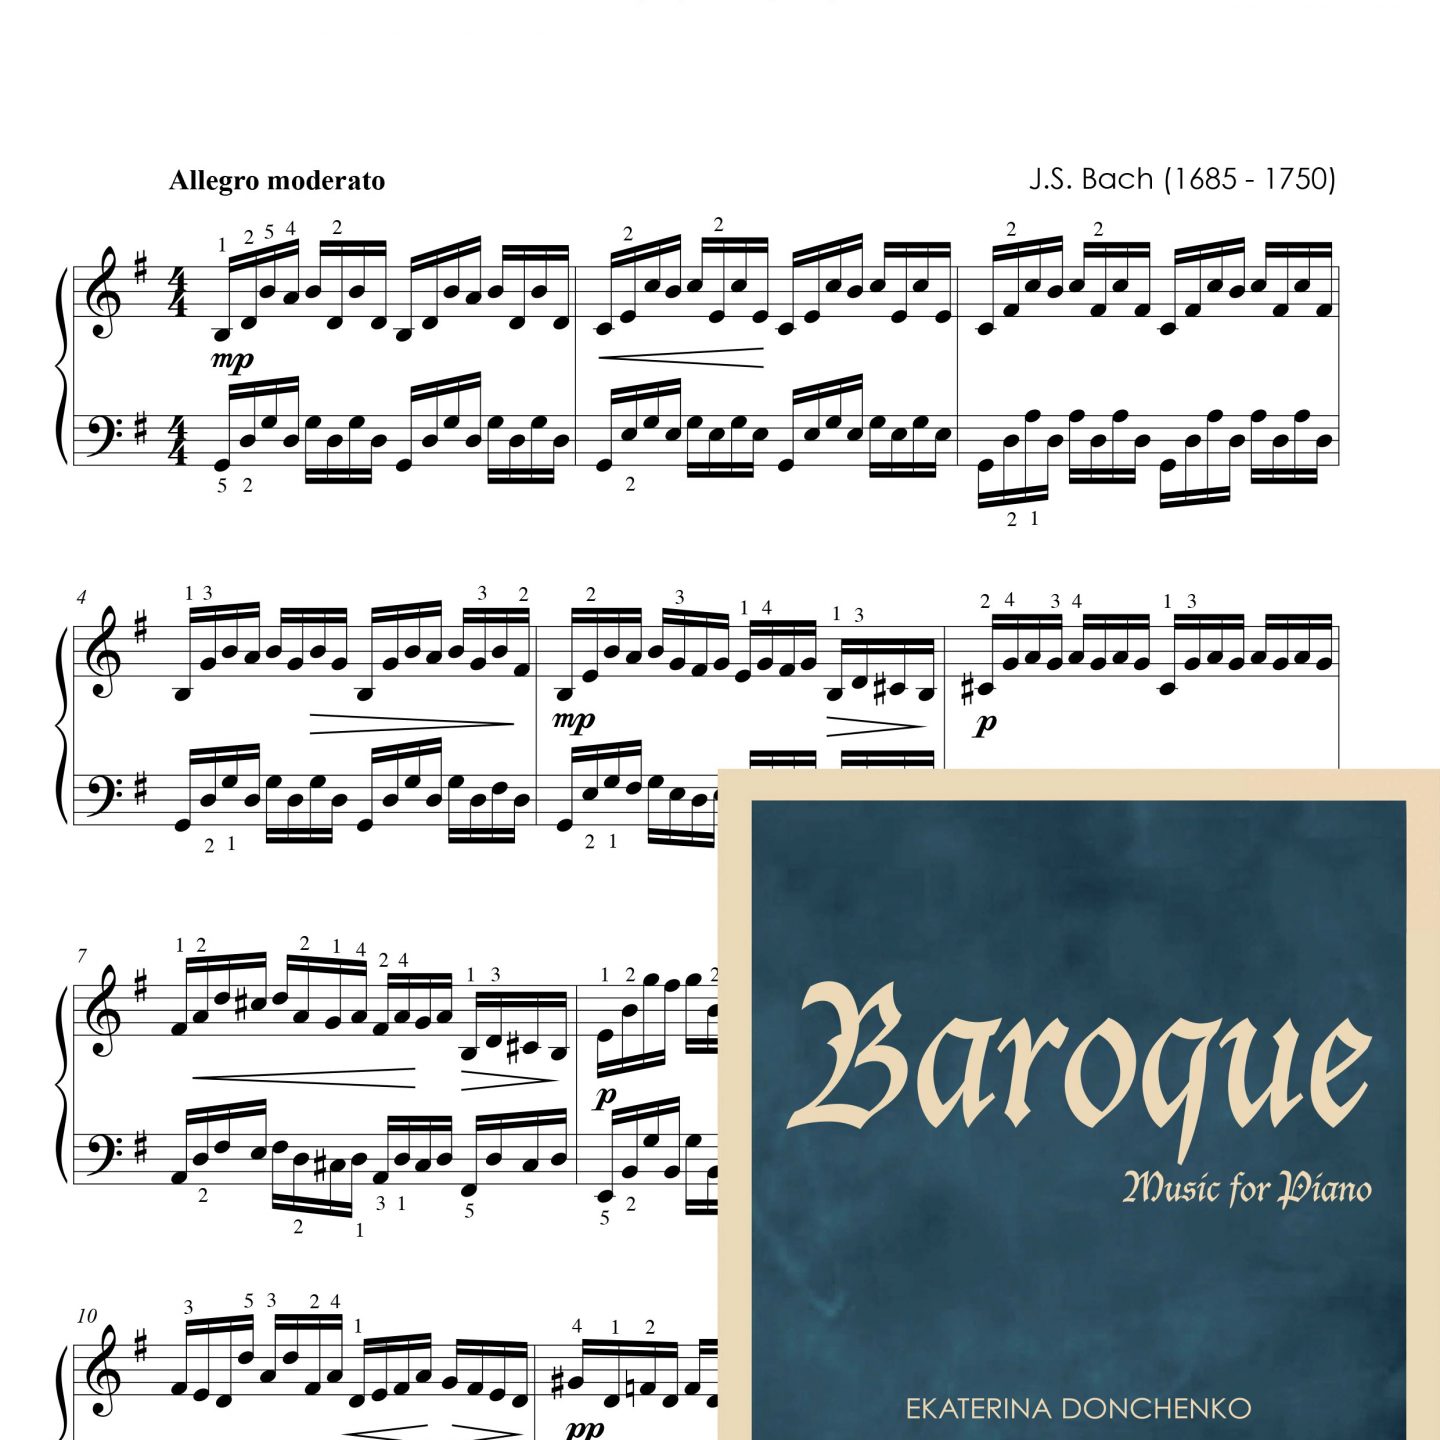 5. Bach, J.S. “Prelude”